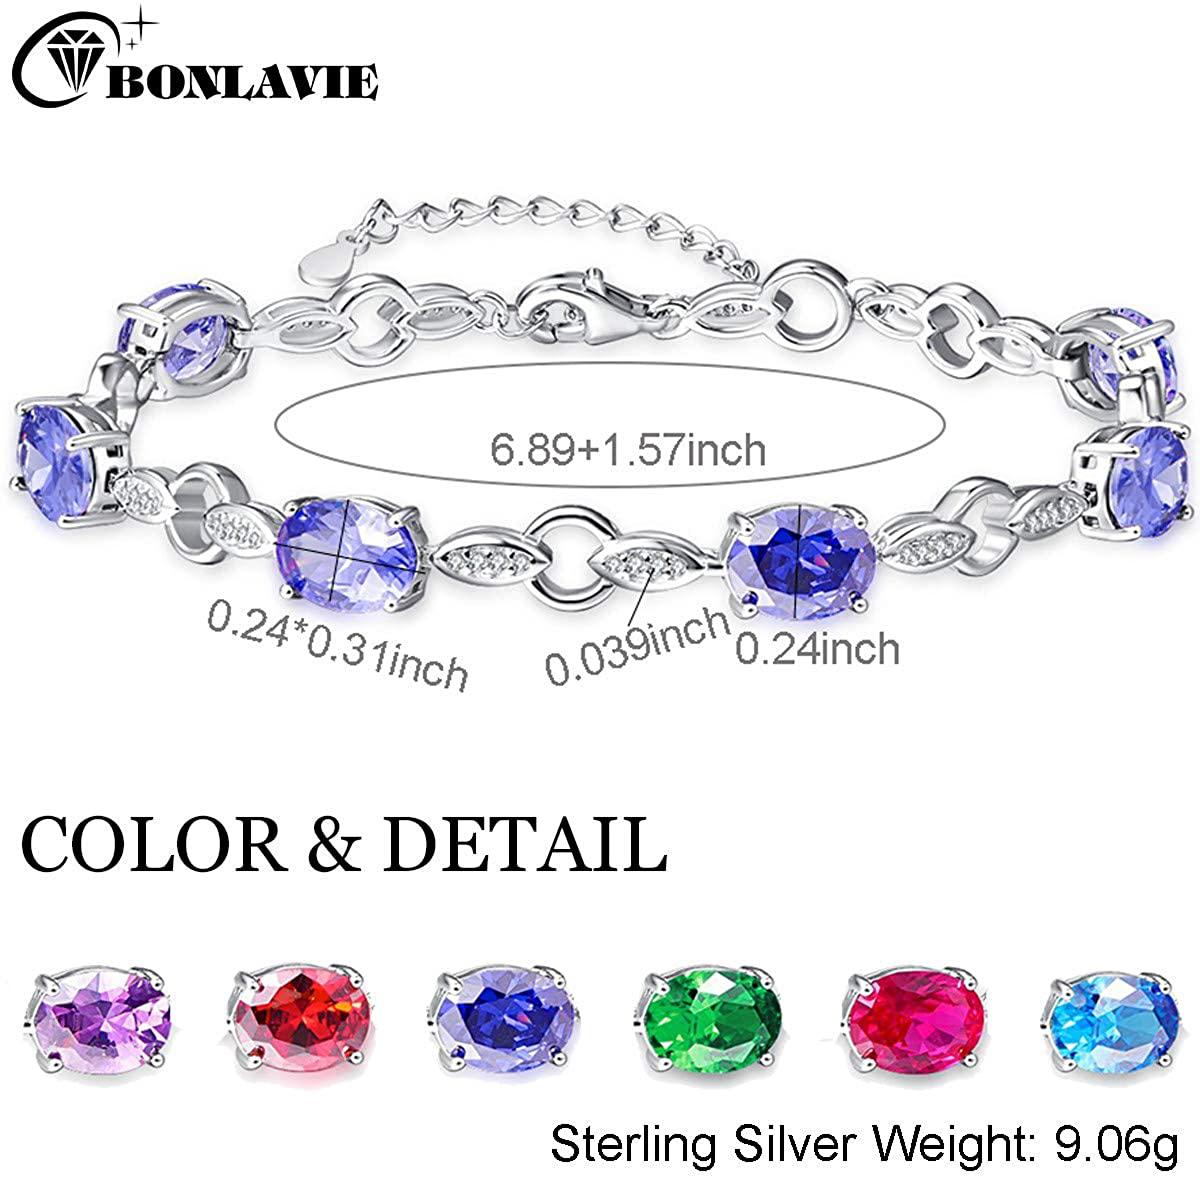 Women’S round Cut White Cubic Zirconia Birthstone 925 Sterling Silver Link Chain Bracelet 6.89”